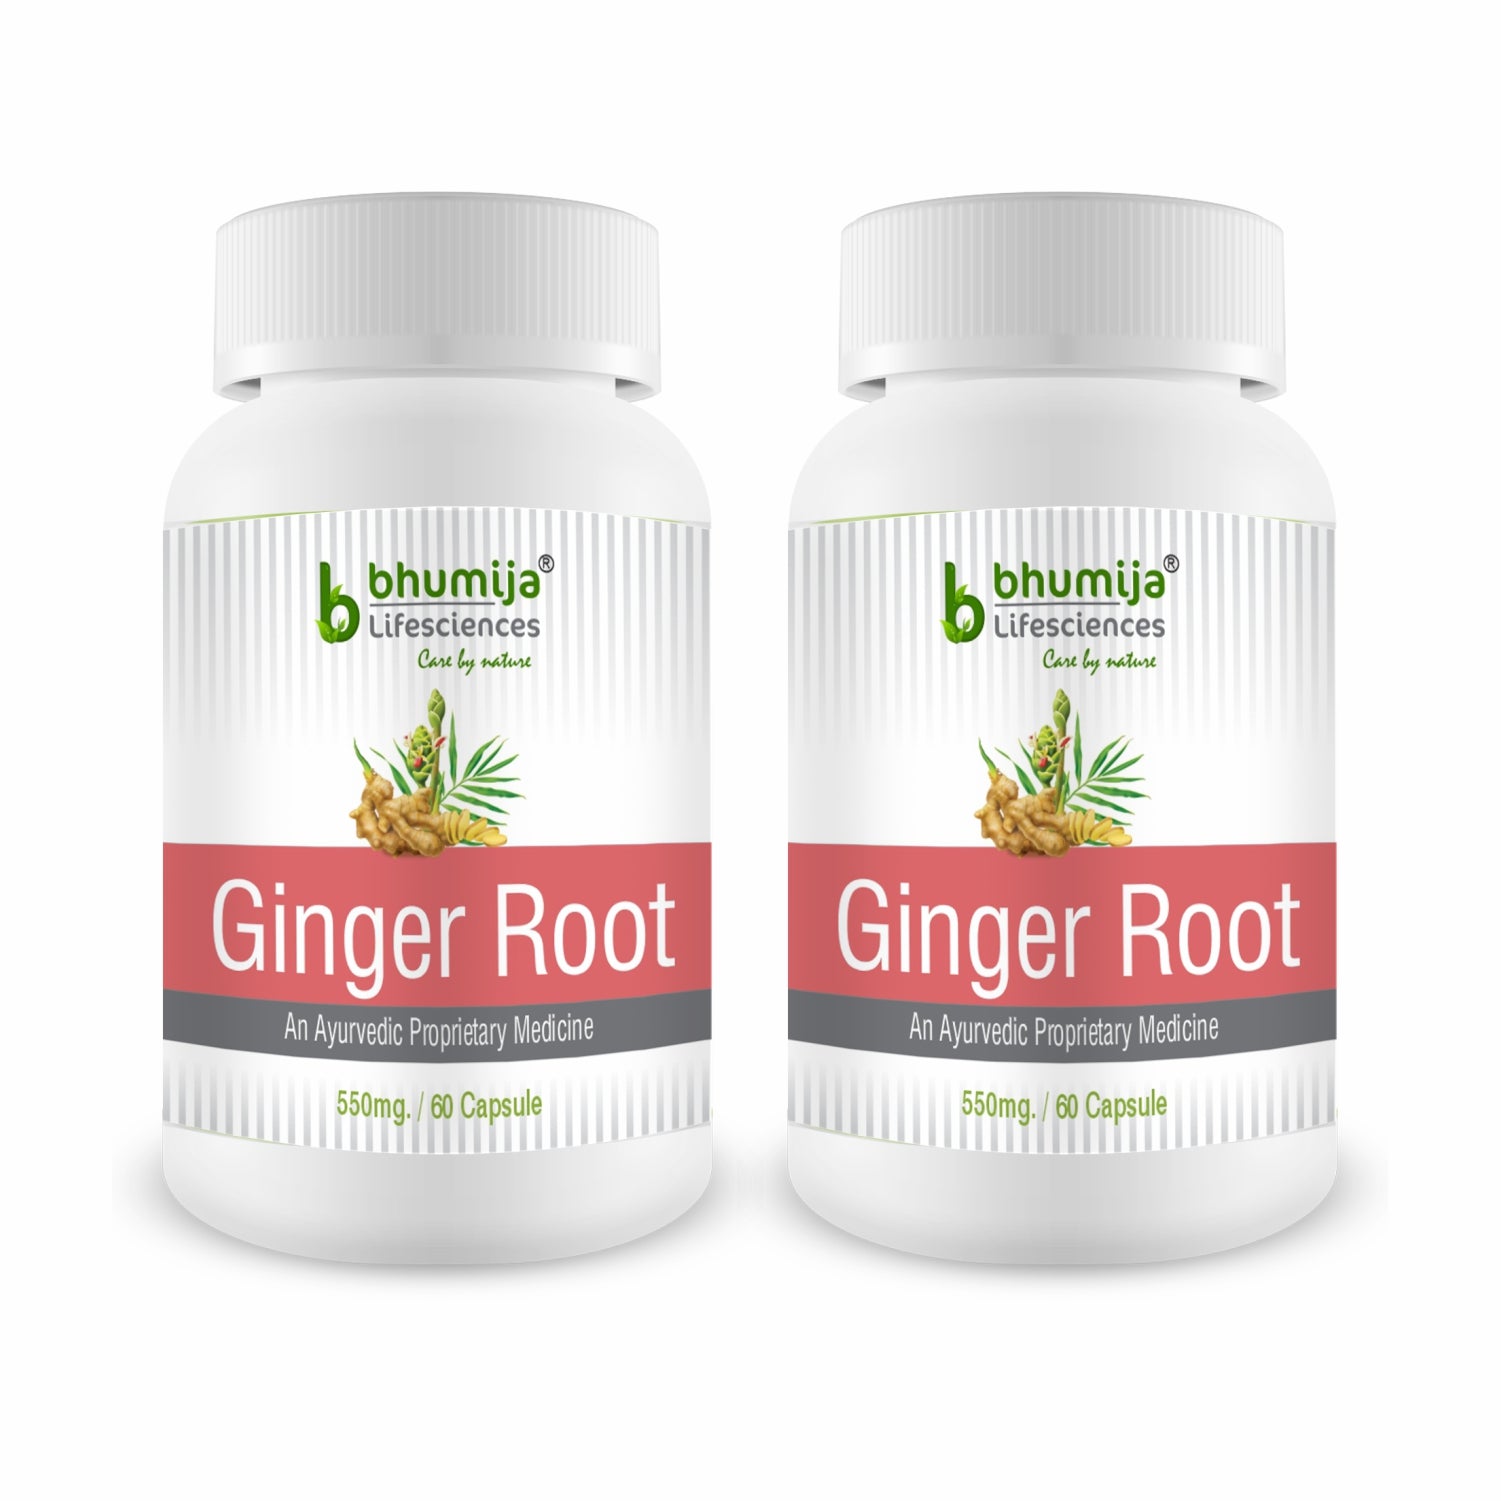 Bhumija Lifesciences Ginger Root 60 Capsules (Bottle 1)